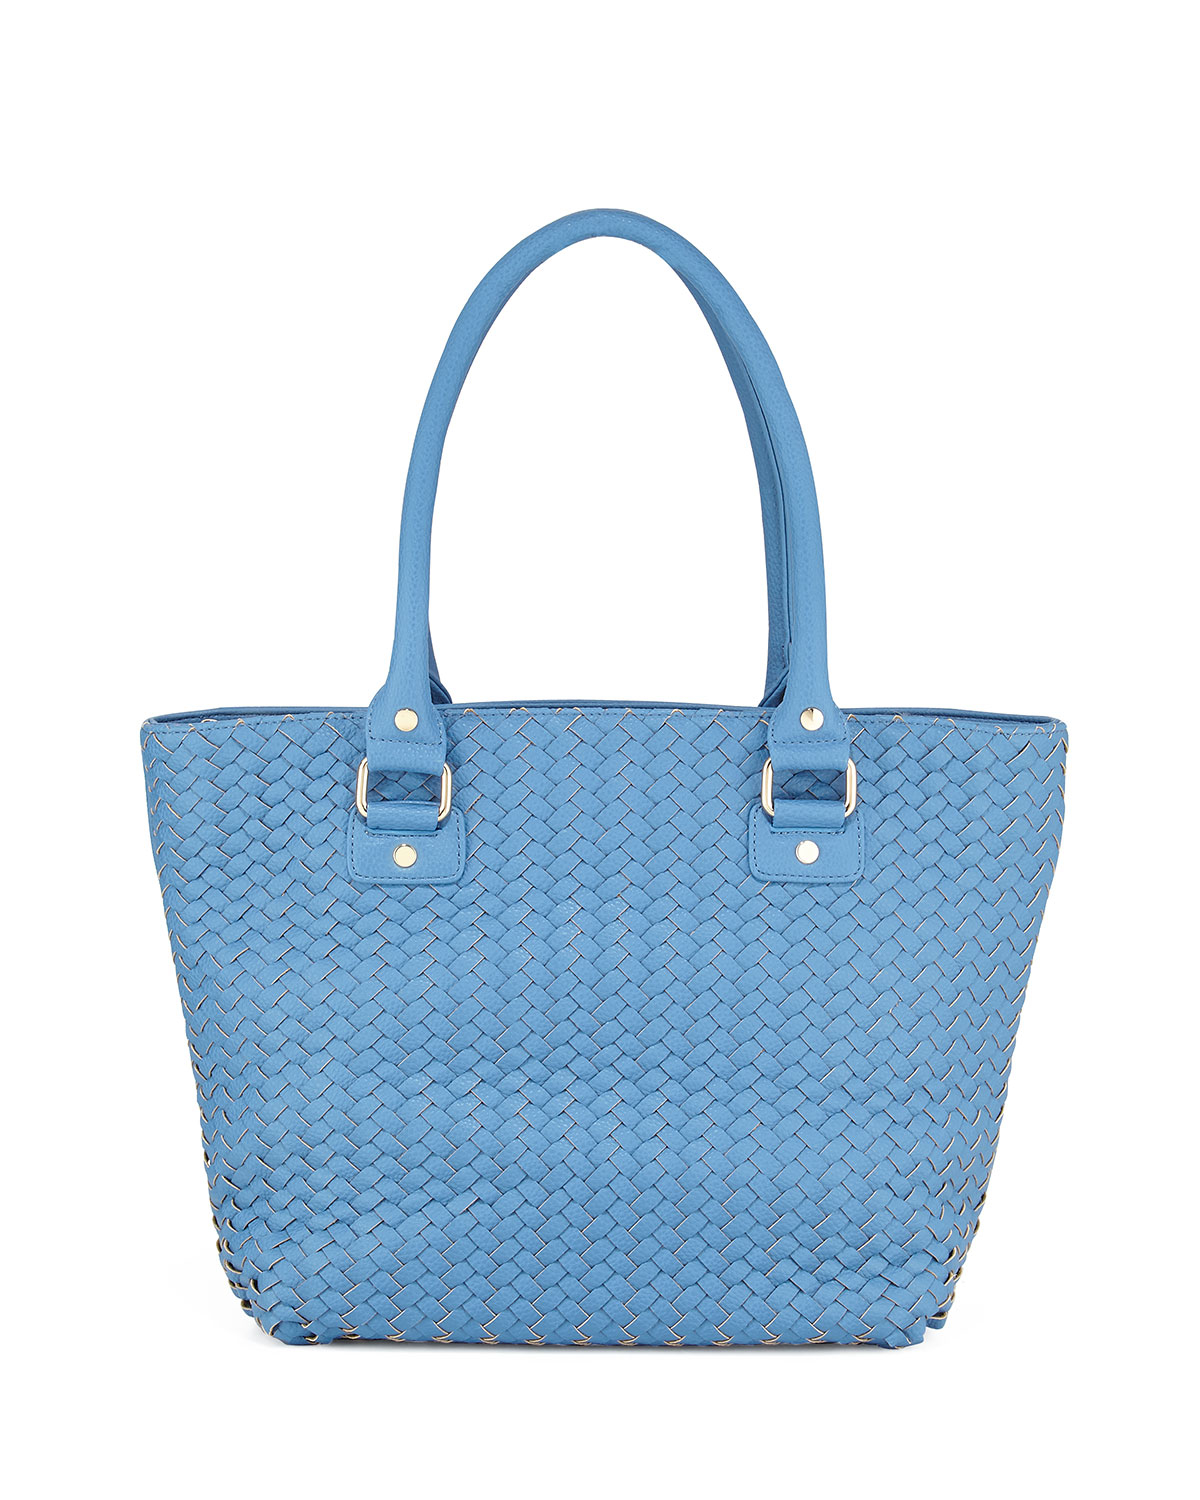 Lyst - Neiman Marcus Woven Shopper Tote Bag in Blue